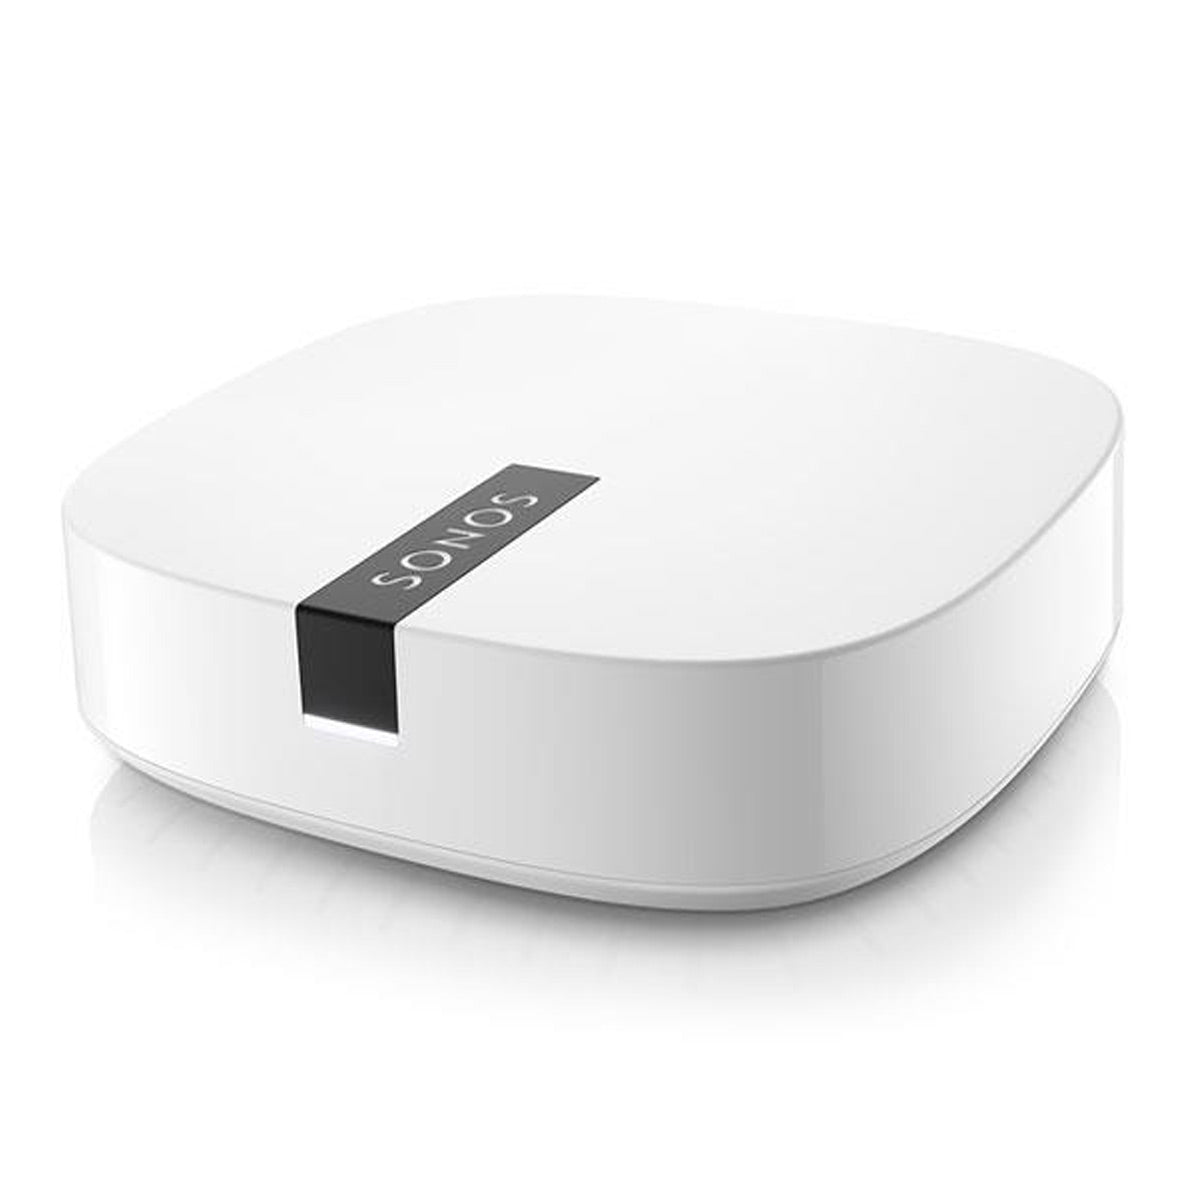 Sonos BOOST Enterprise-Grade Wireless Adapter for Sonos (White)